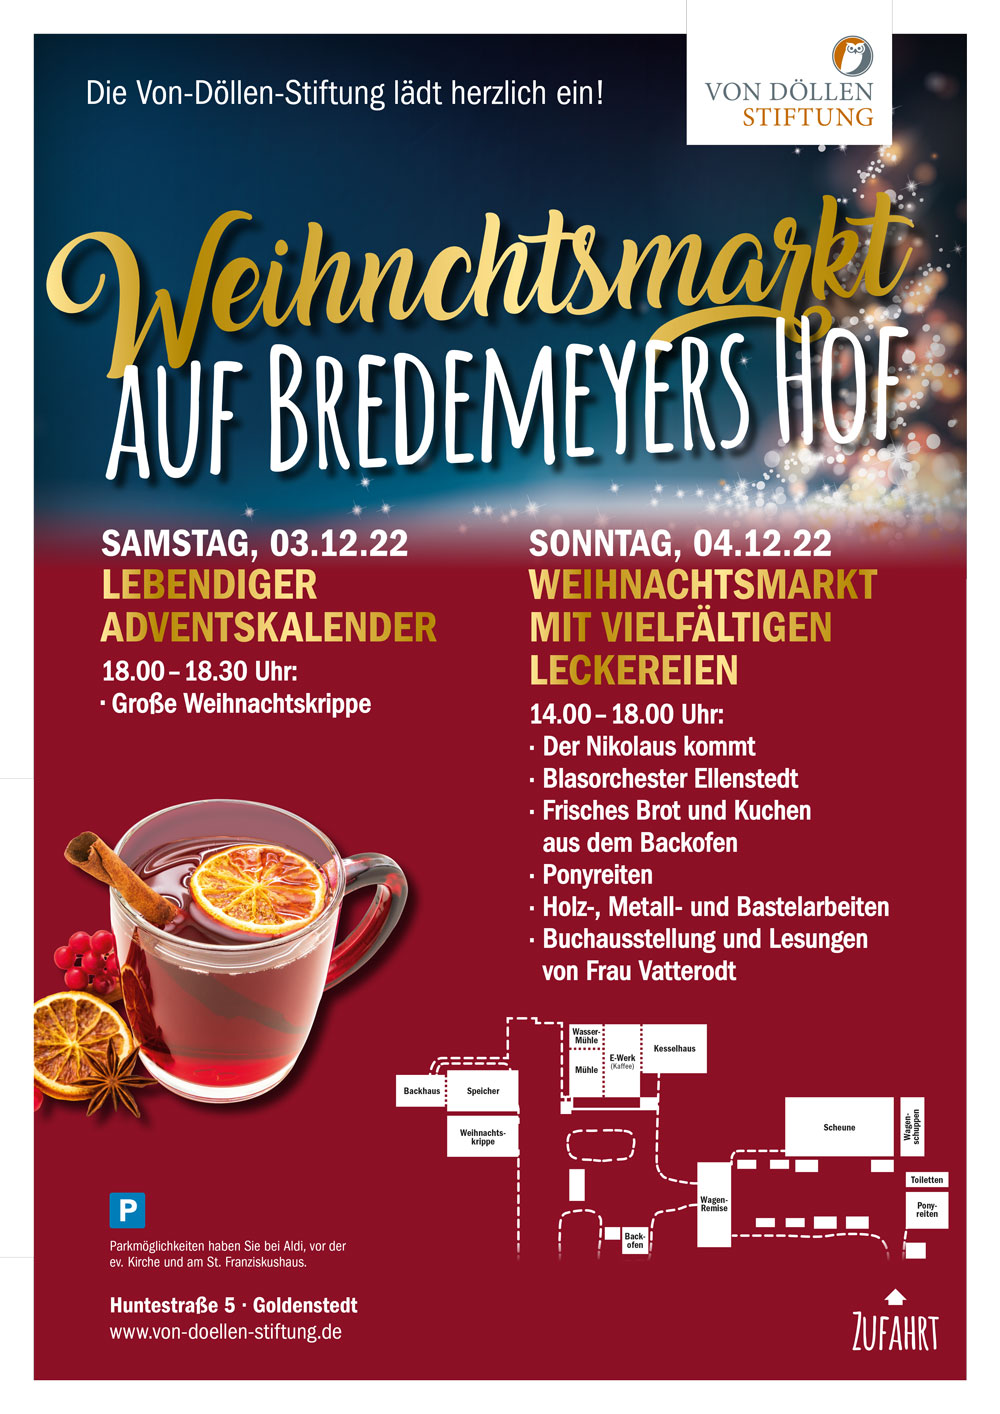 VDS Plakat Weihnachtsmarkt Bredemeyers Hof DIN A3 11 22